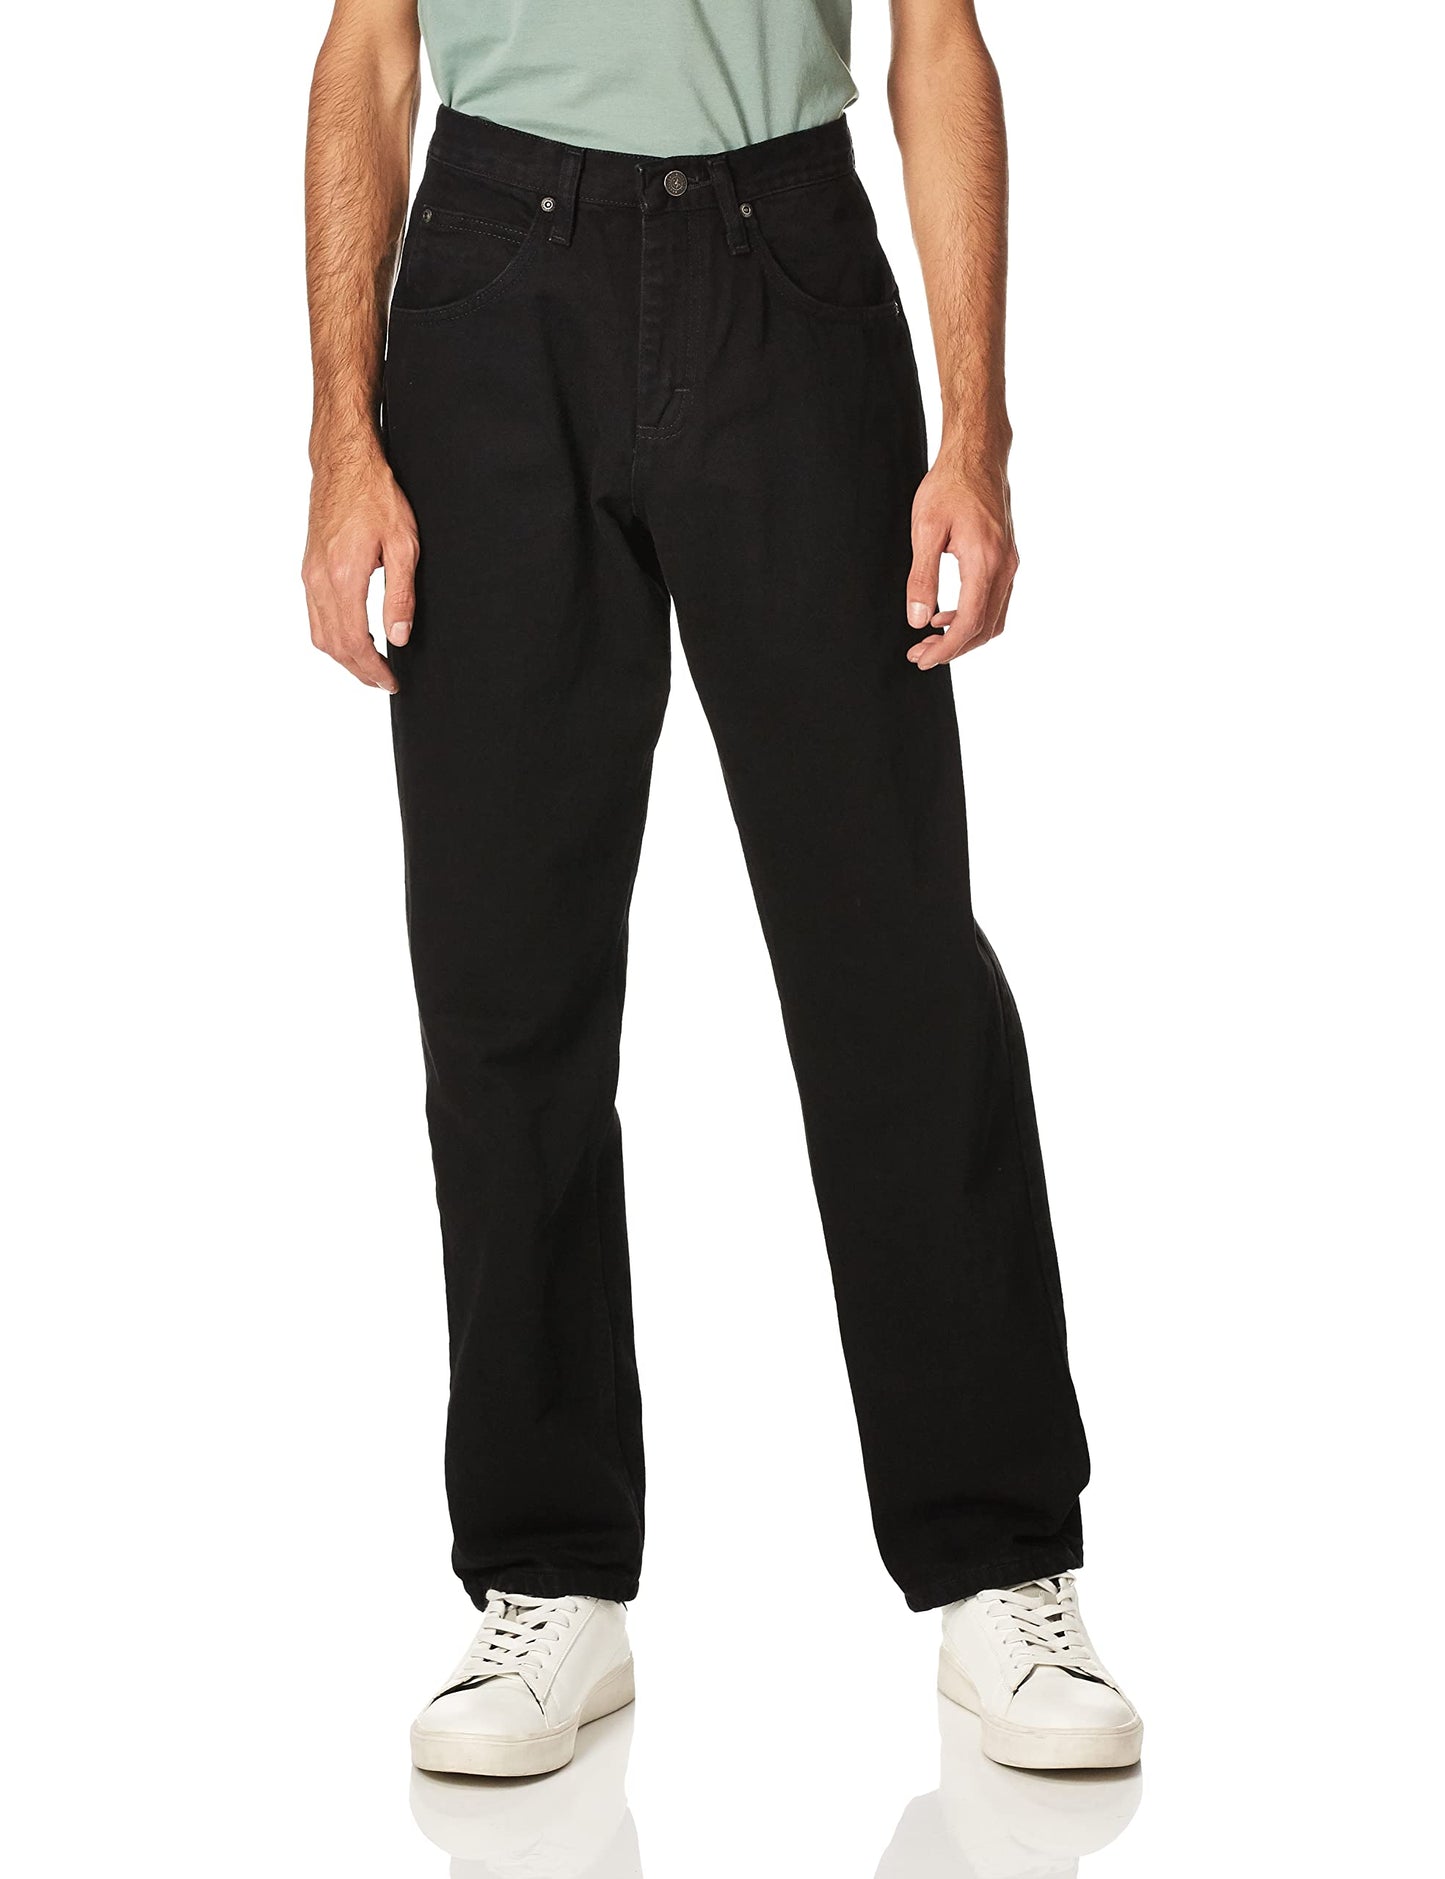 Wrangler Authentics Men's Classic 5-Pocket Relaxed Fit Cotton Jean, Black, 38W x 30L